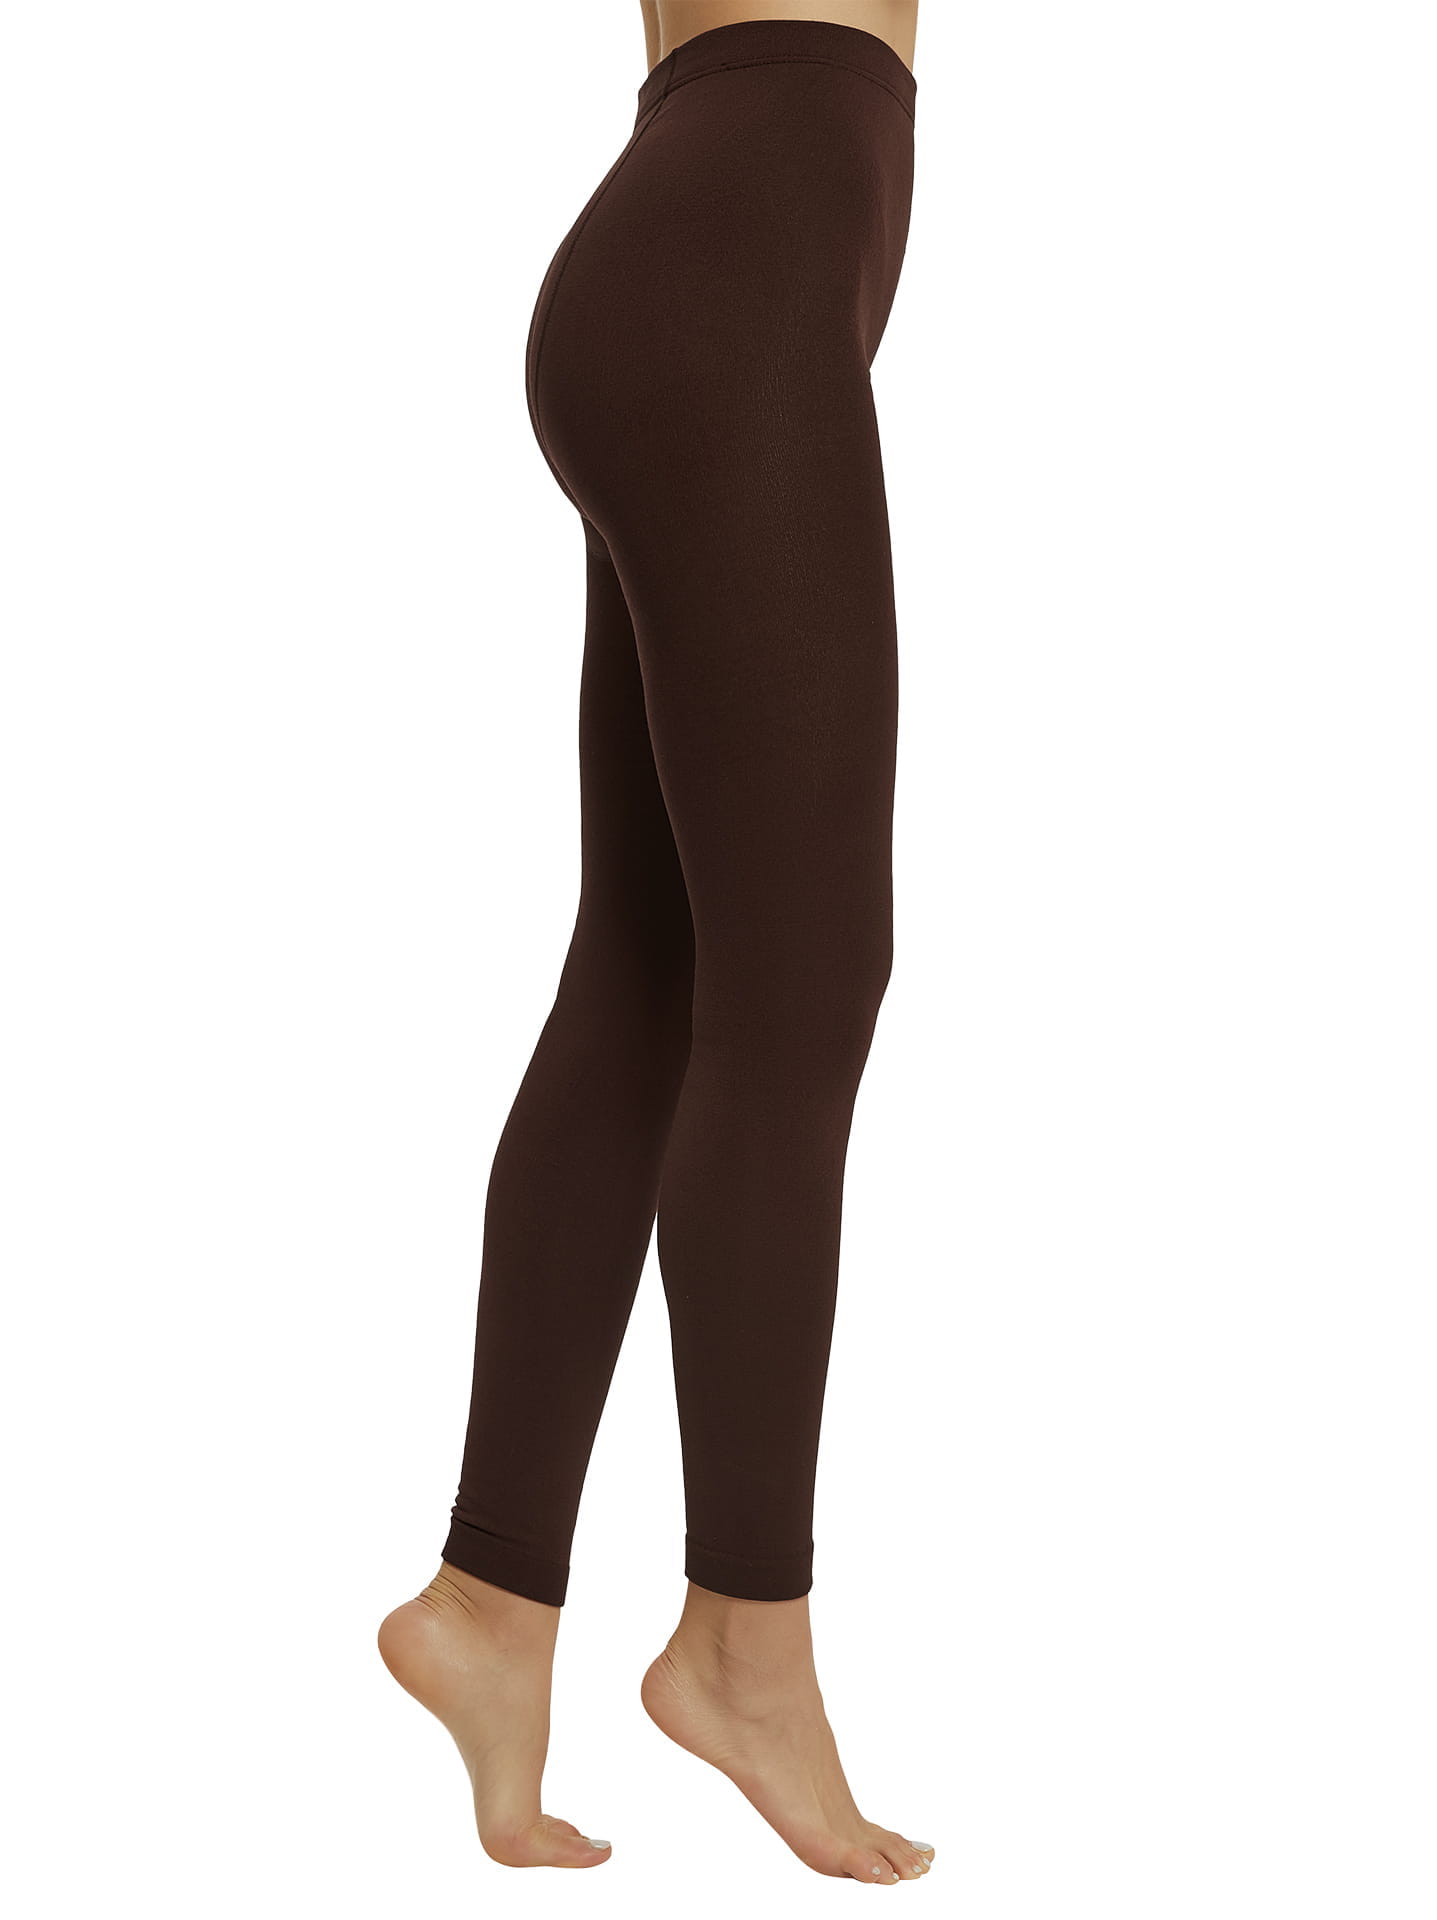 Thermal leggings 380den in dark brown, 4.99€